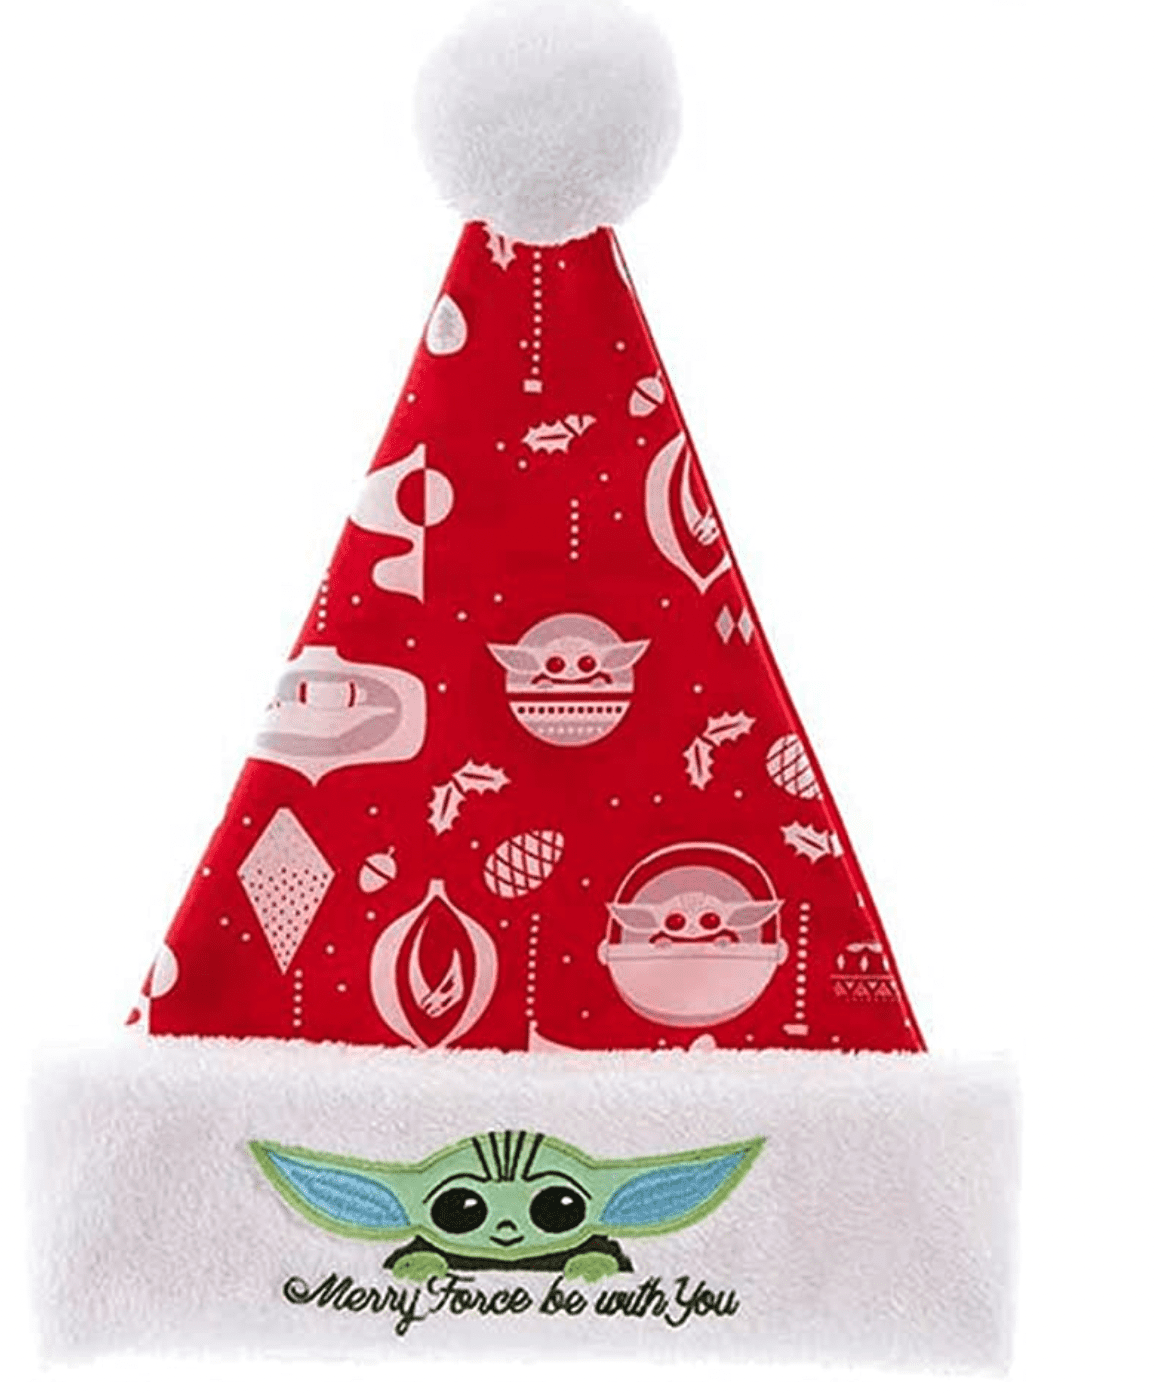 FAST SHIPPING. Star Wars The Mandalorian Baby Yoda Santa hat 